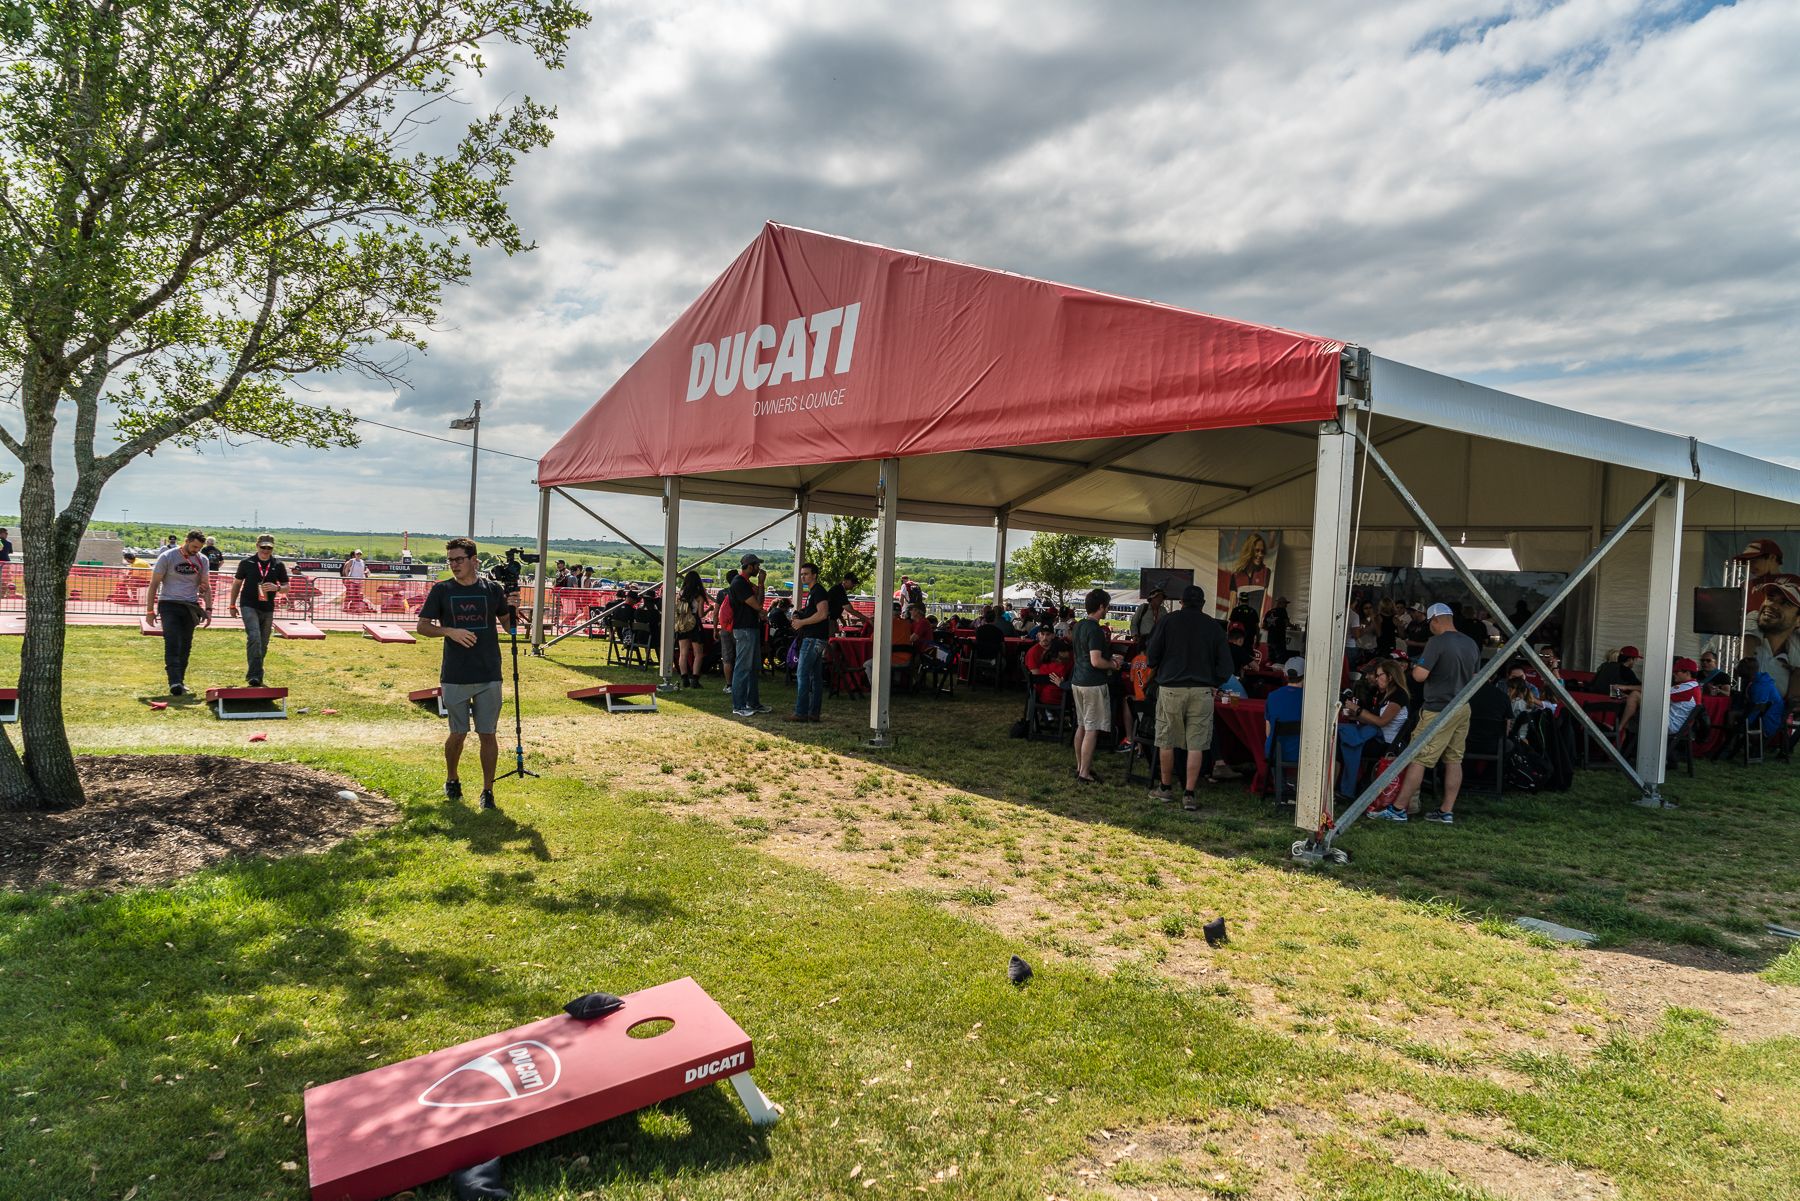 Owner's Lounge - Ducati Island, Austin MotoGP 2016